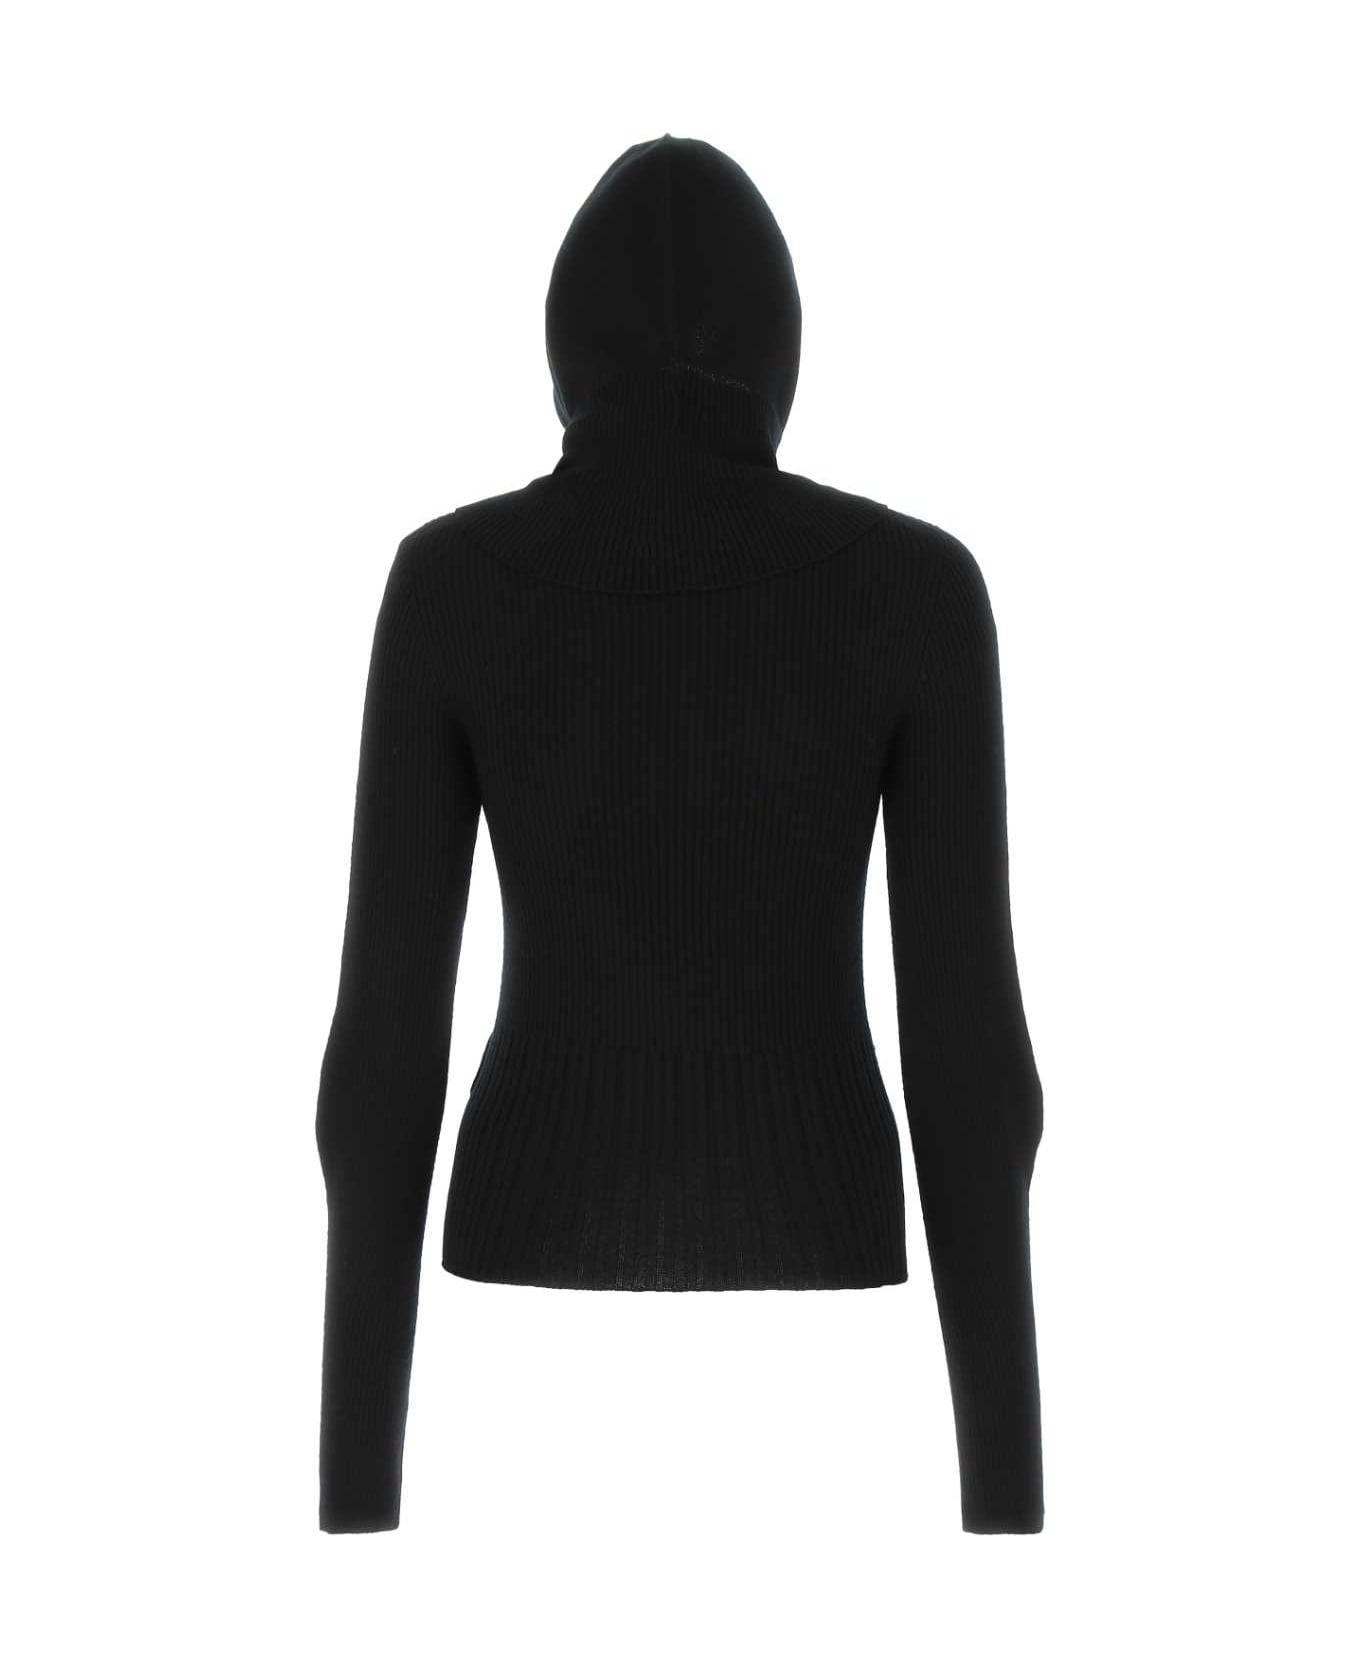 Low Classic Black Wool Sweater - 0372